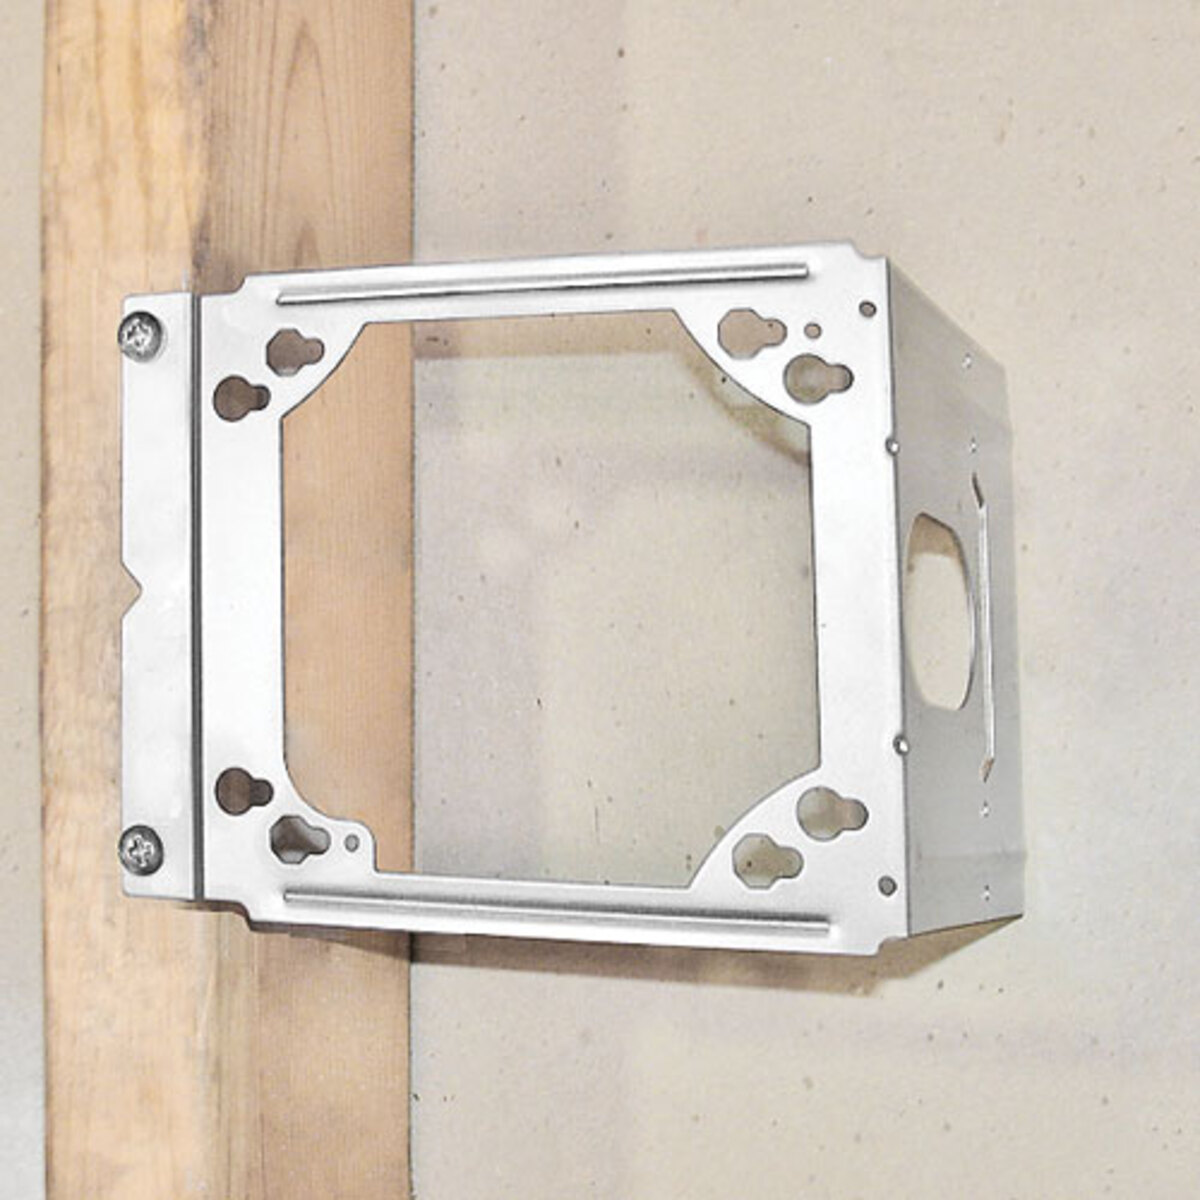 Box Mounting Bracket For Standard Device Rings - 2-1/2" Through 6" Farside Standoff